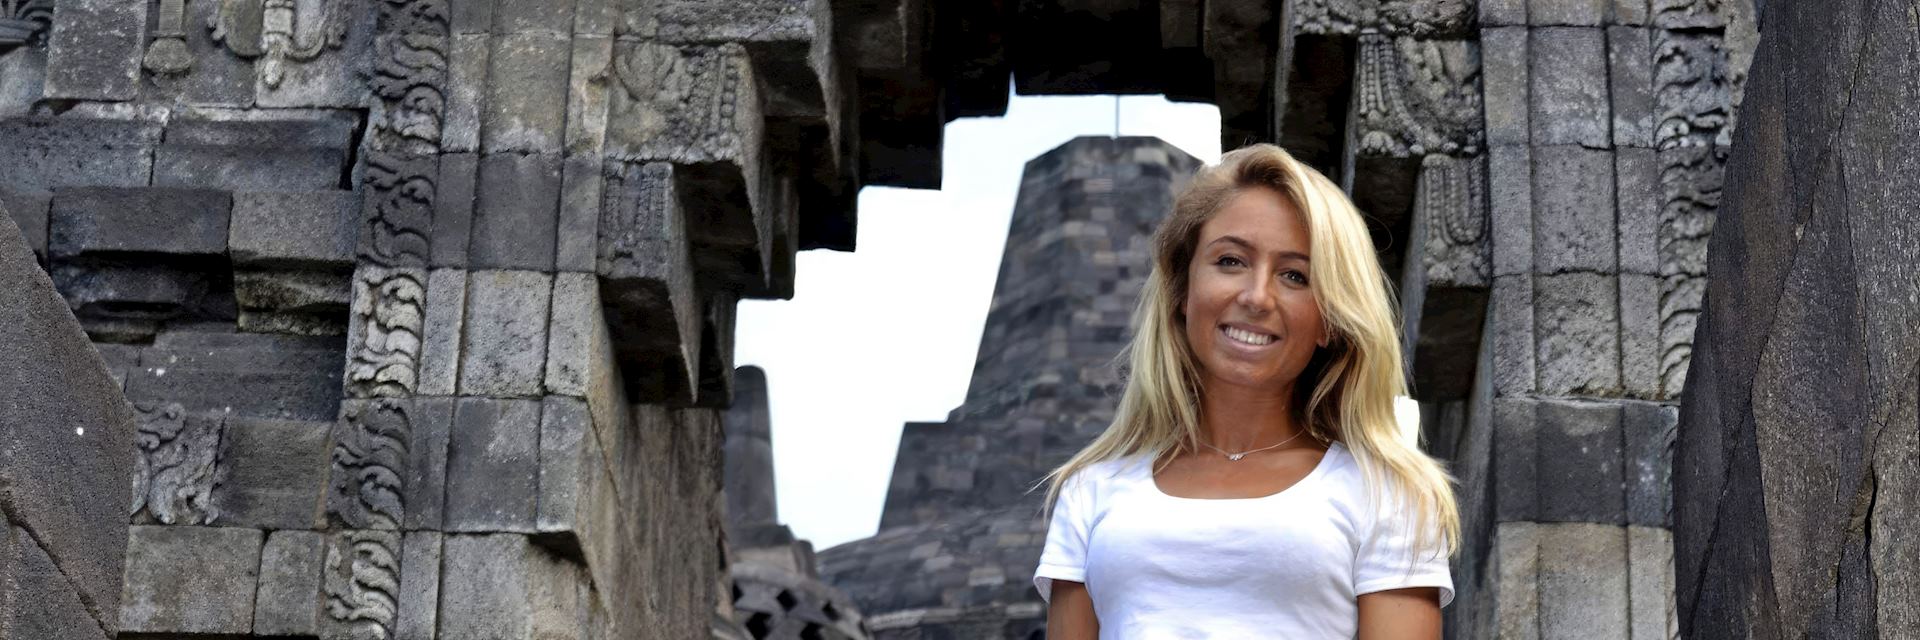 Jess at Borobudur, Indonesia